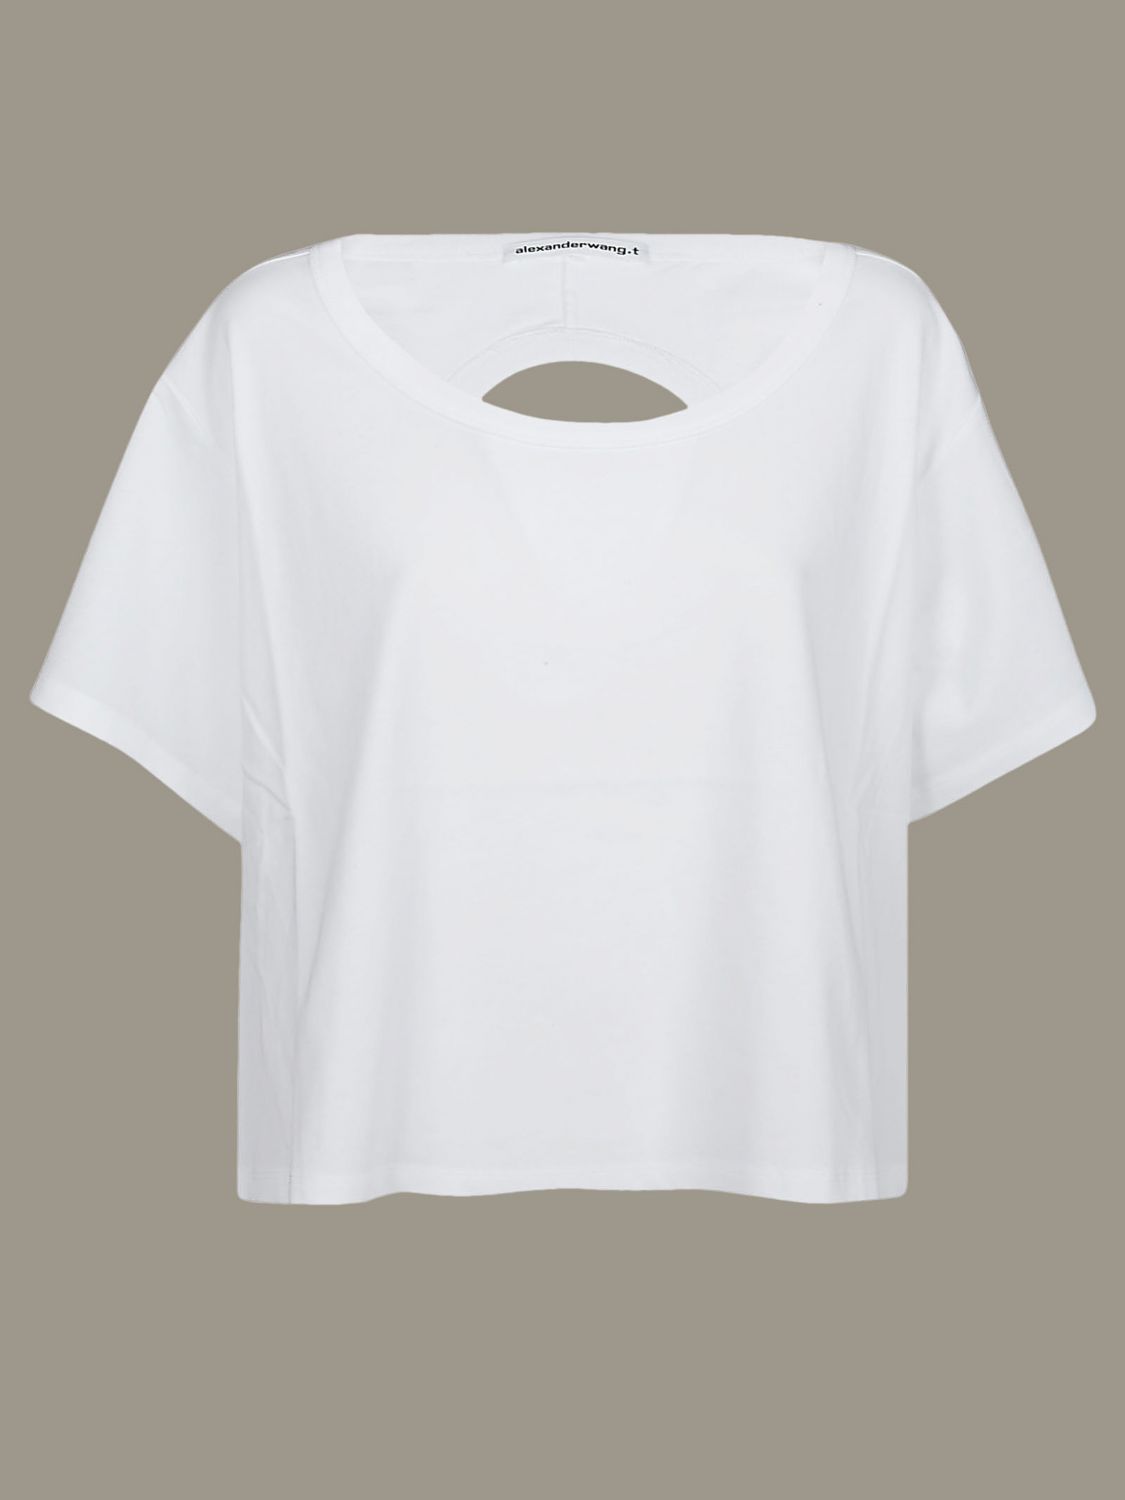 Alexander Wang T-shirt  Women Color White